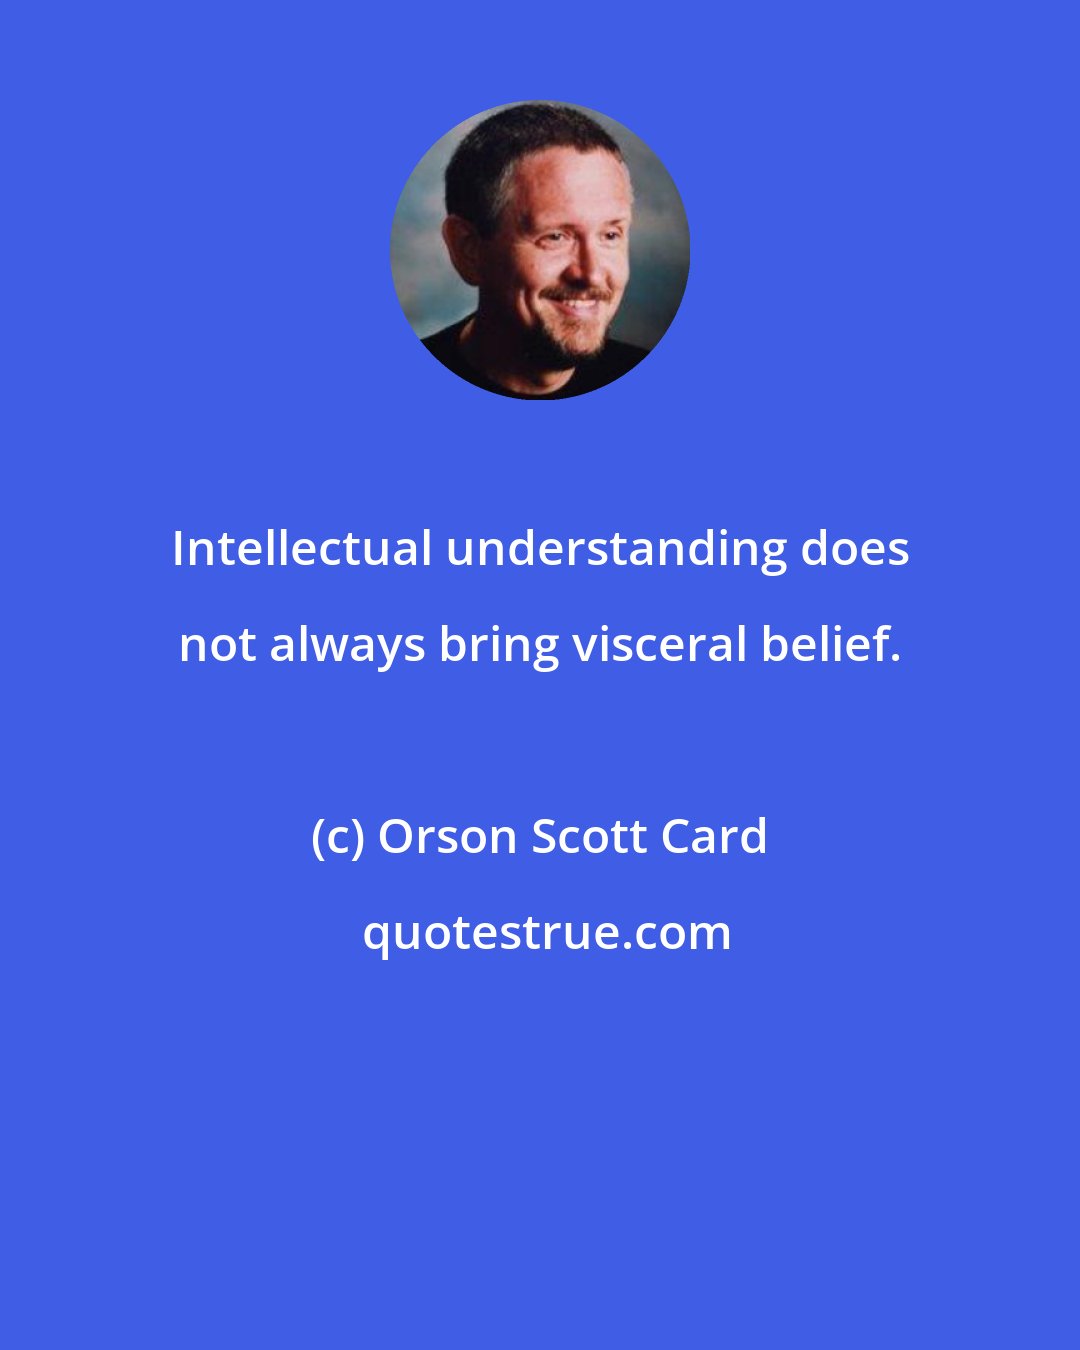 Orson Scott Card: Intellectual understanding does not always bring visceral belief.